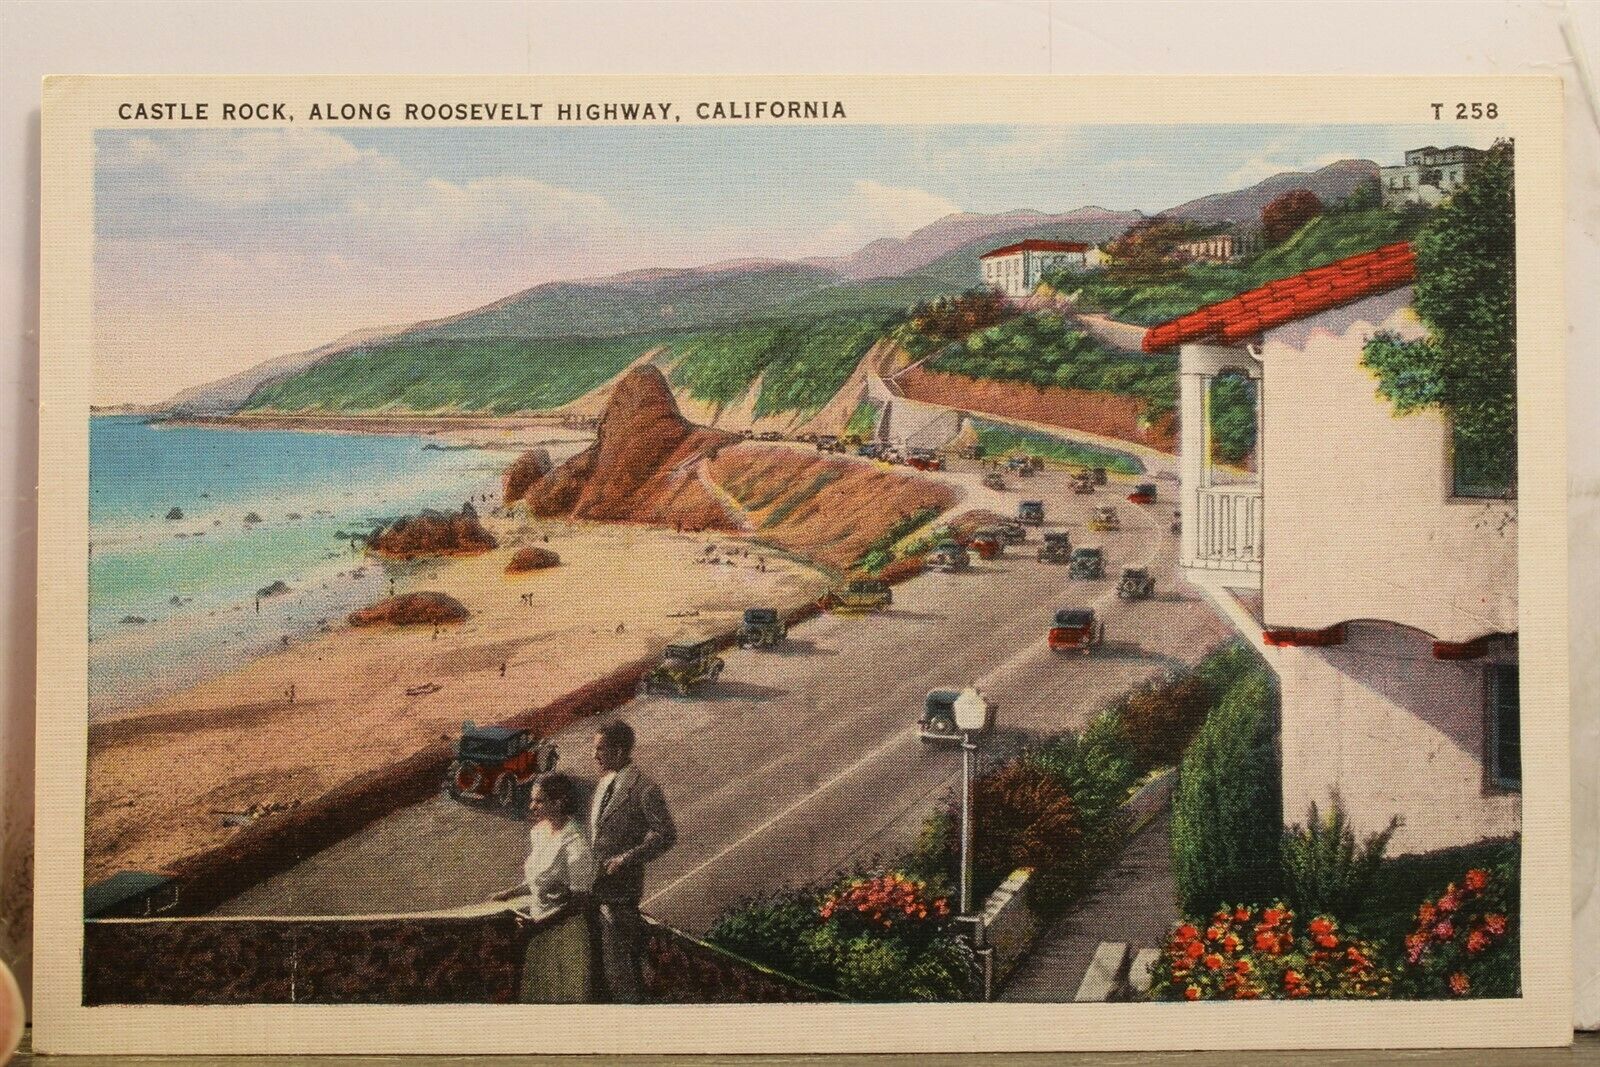 California Ca Roosevelt Highway Castle Rock Postcard Old Vintage Card View Post